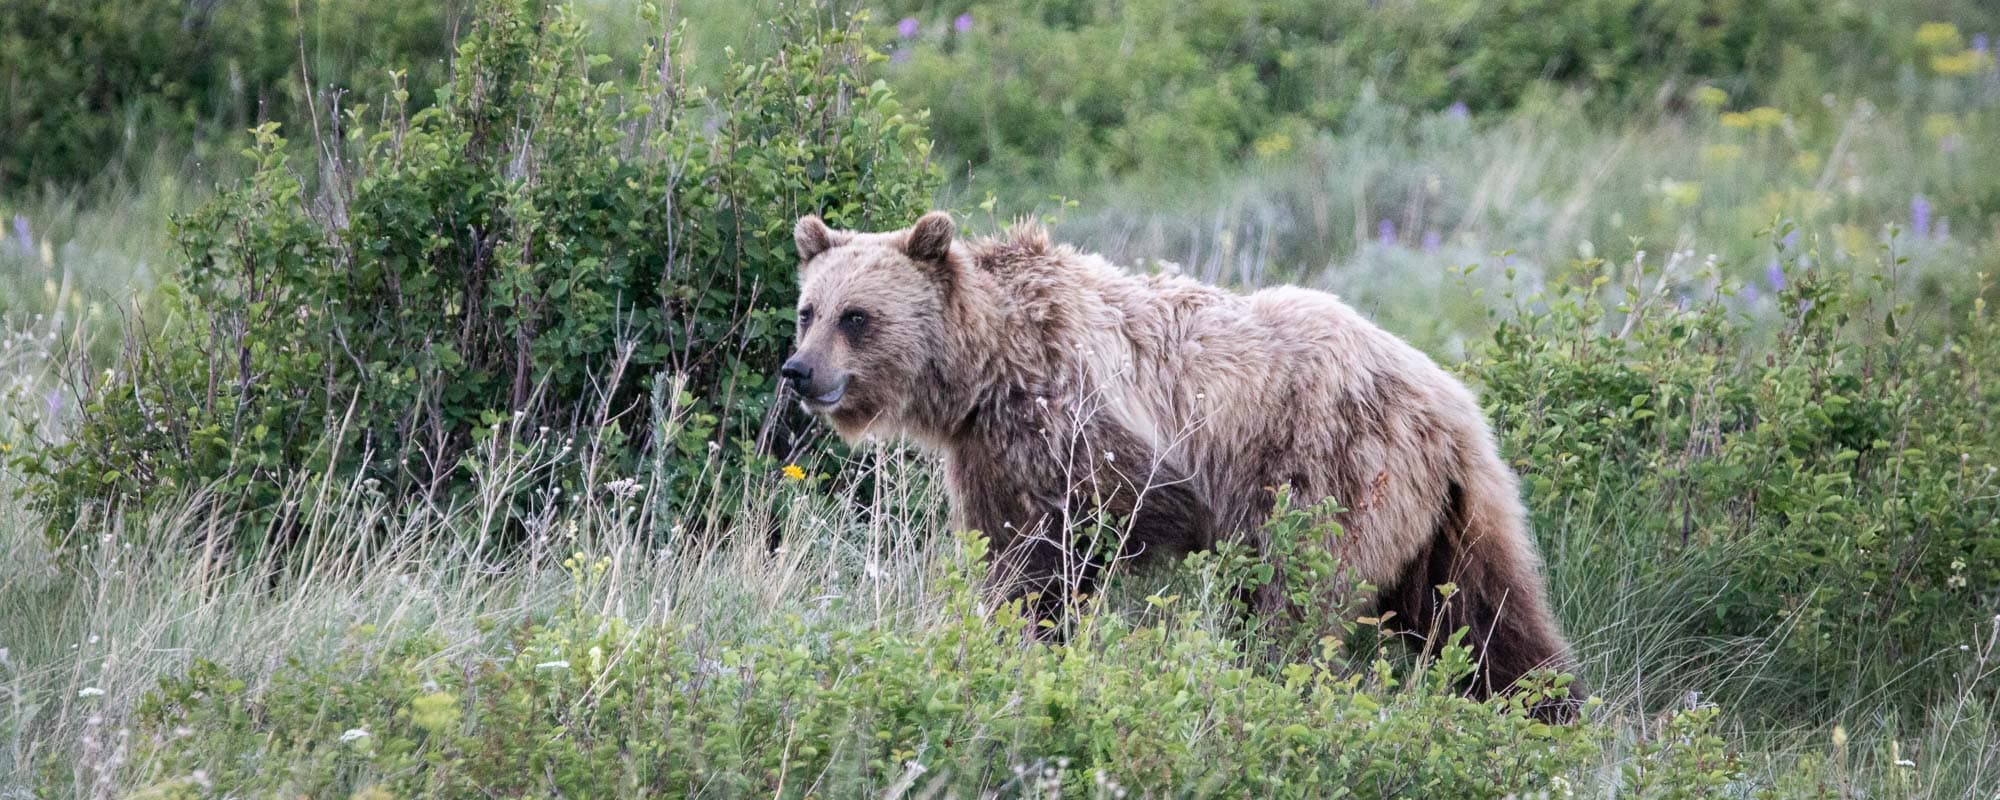 Glacier National Park - Grizzly bear